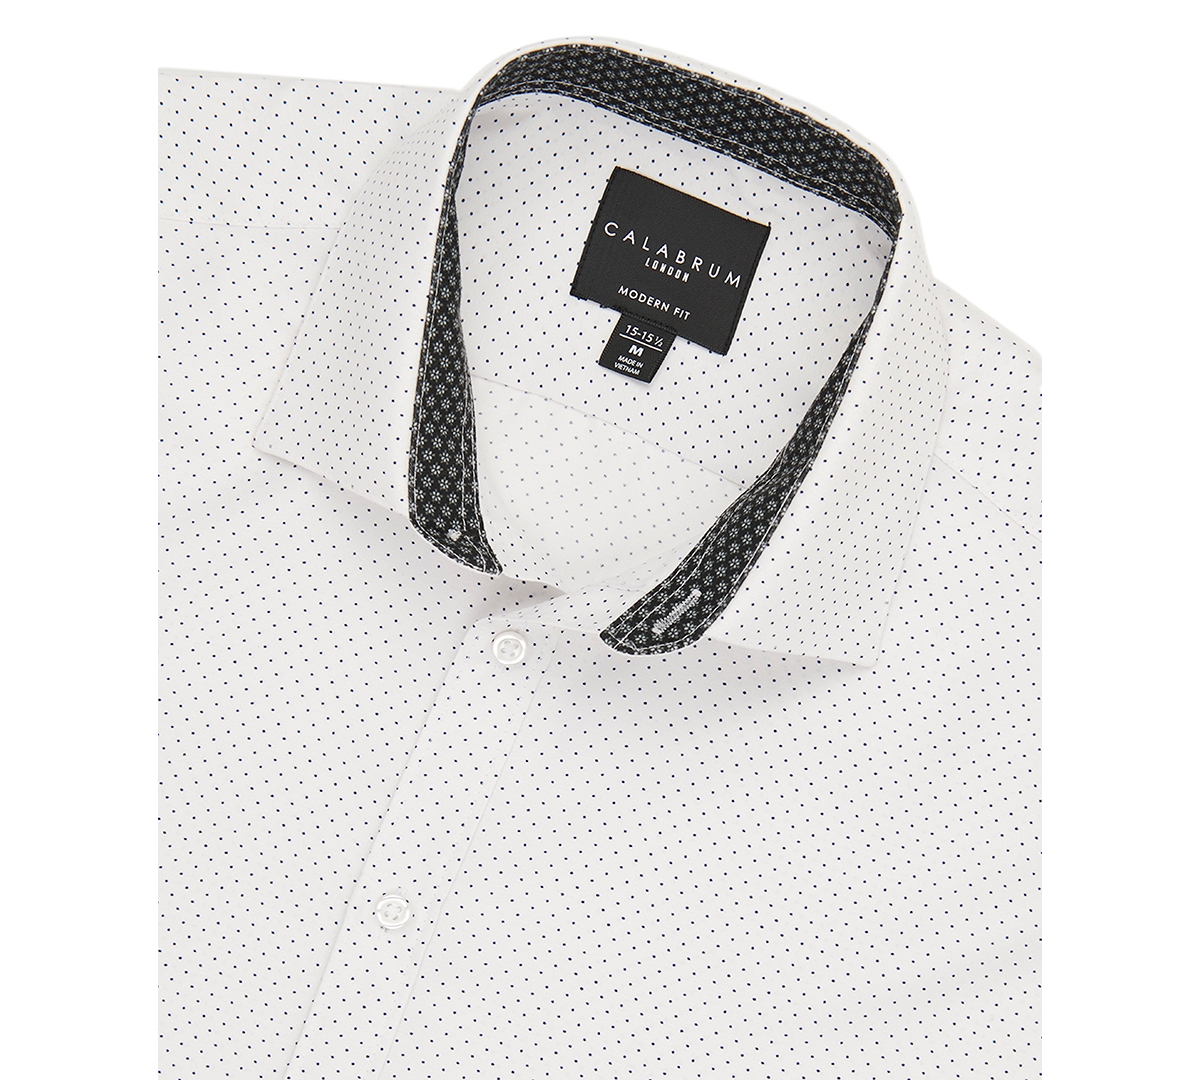 Men's Regular Fit Dot Print Wrinkle Free Performance Dress Shirt - Burgundy